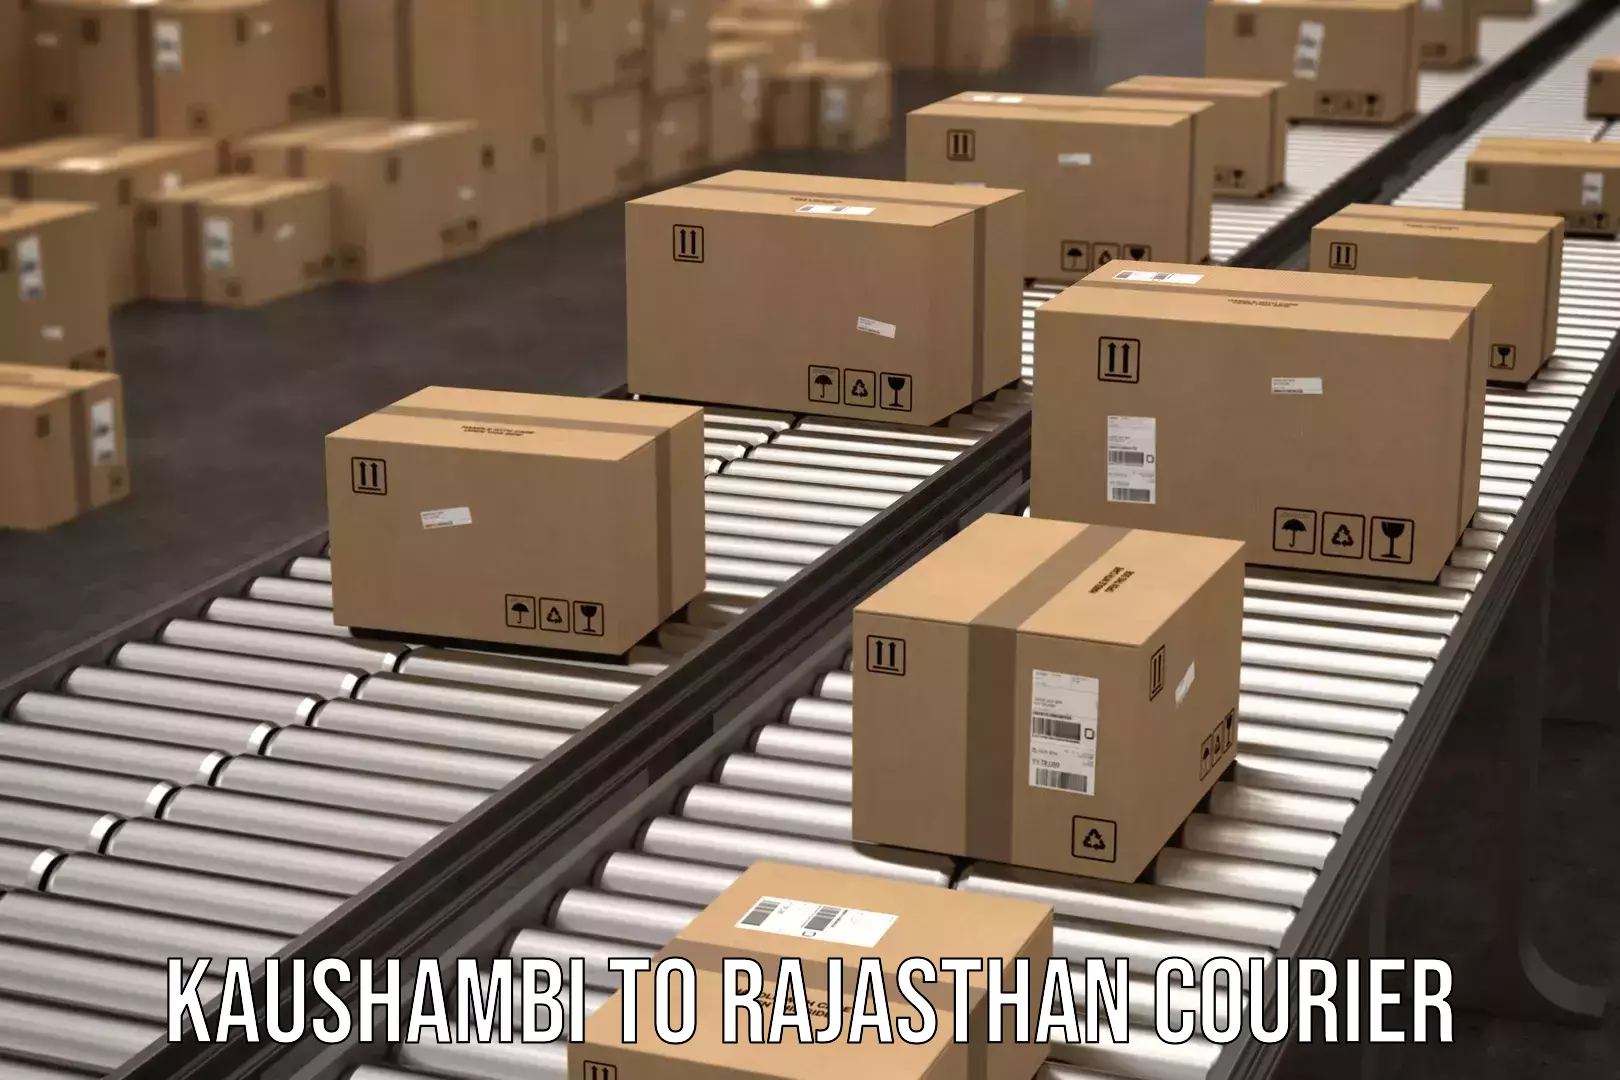 Courier service comparison Kaushambi to Nohar